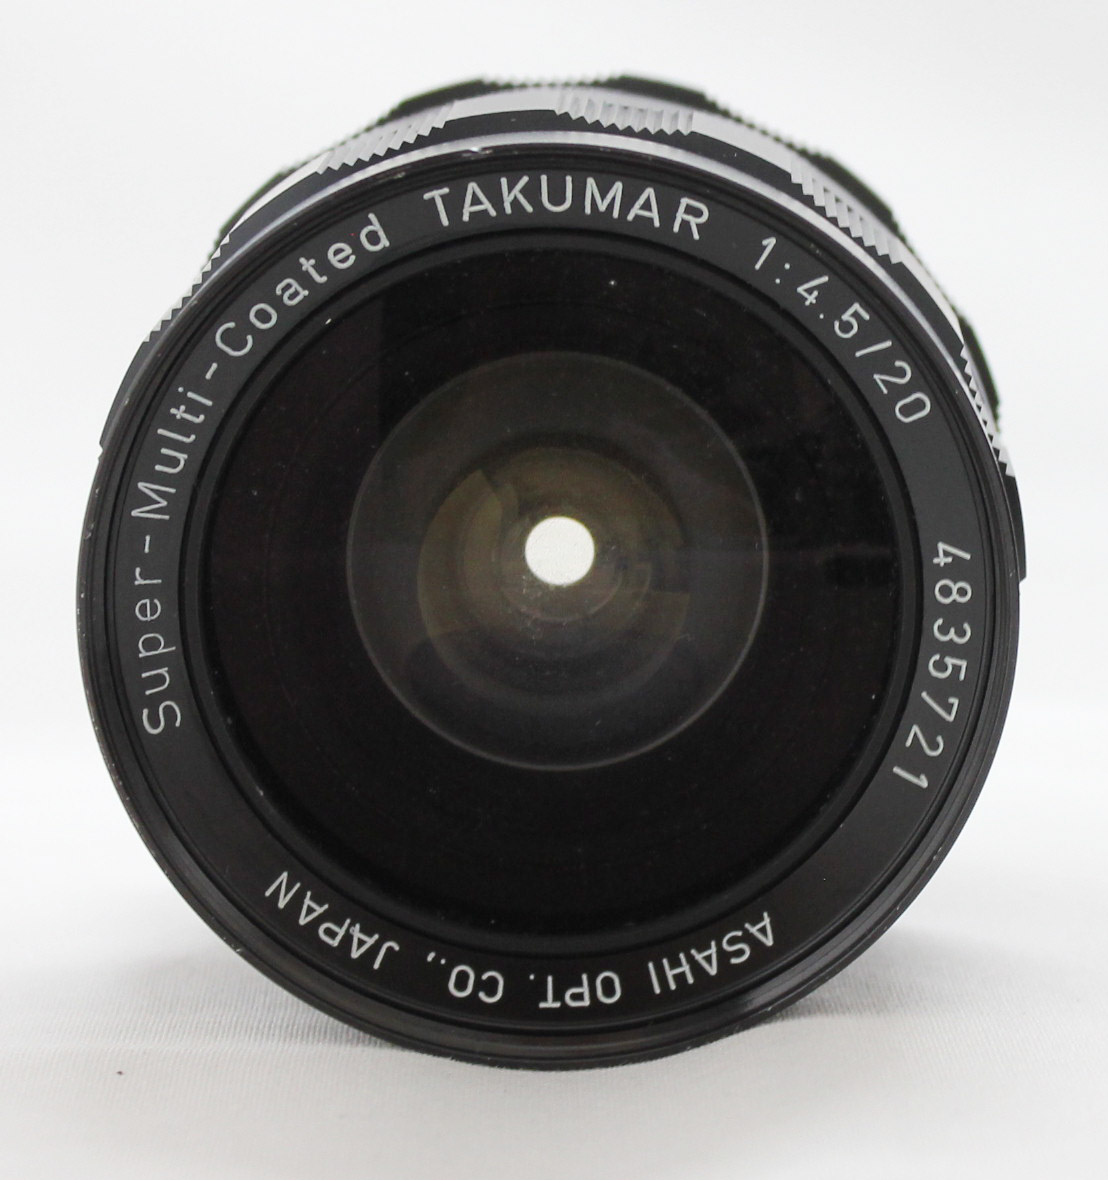 Asahi Pentax SMC Super-Multi-Coated Takumar 20mm F/4.5 M42 MF Lens from